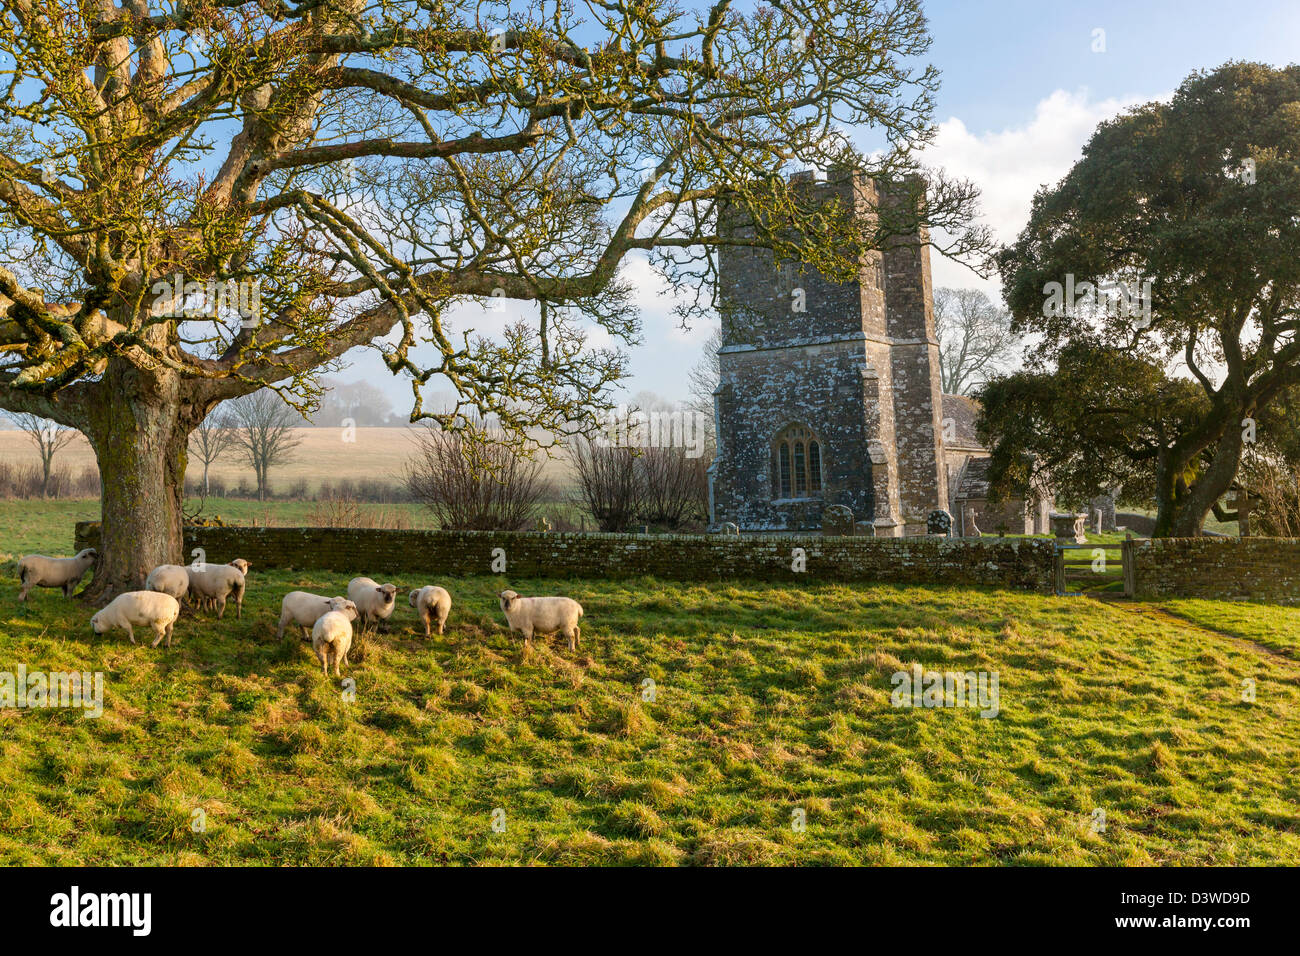 Whitcombe Church built in the 12th century, Whitcombe, Dorset, England, UK, Europe. Stock Photo